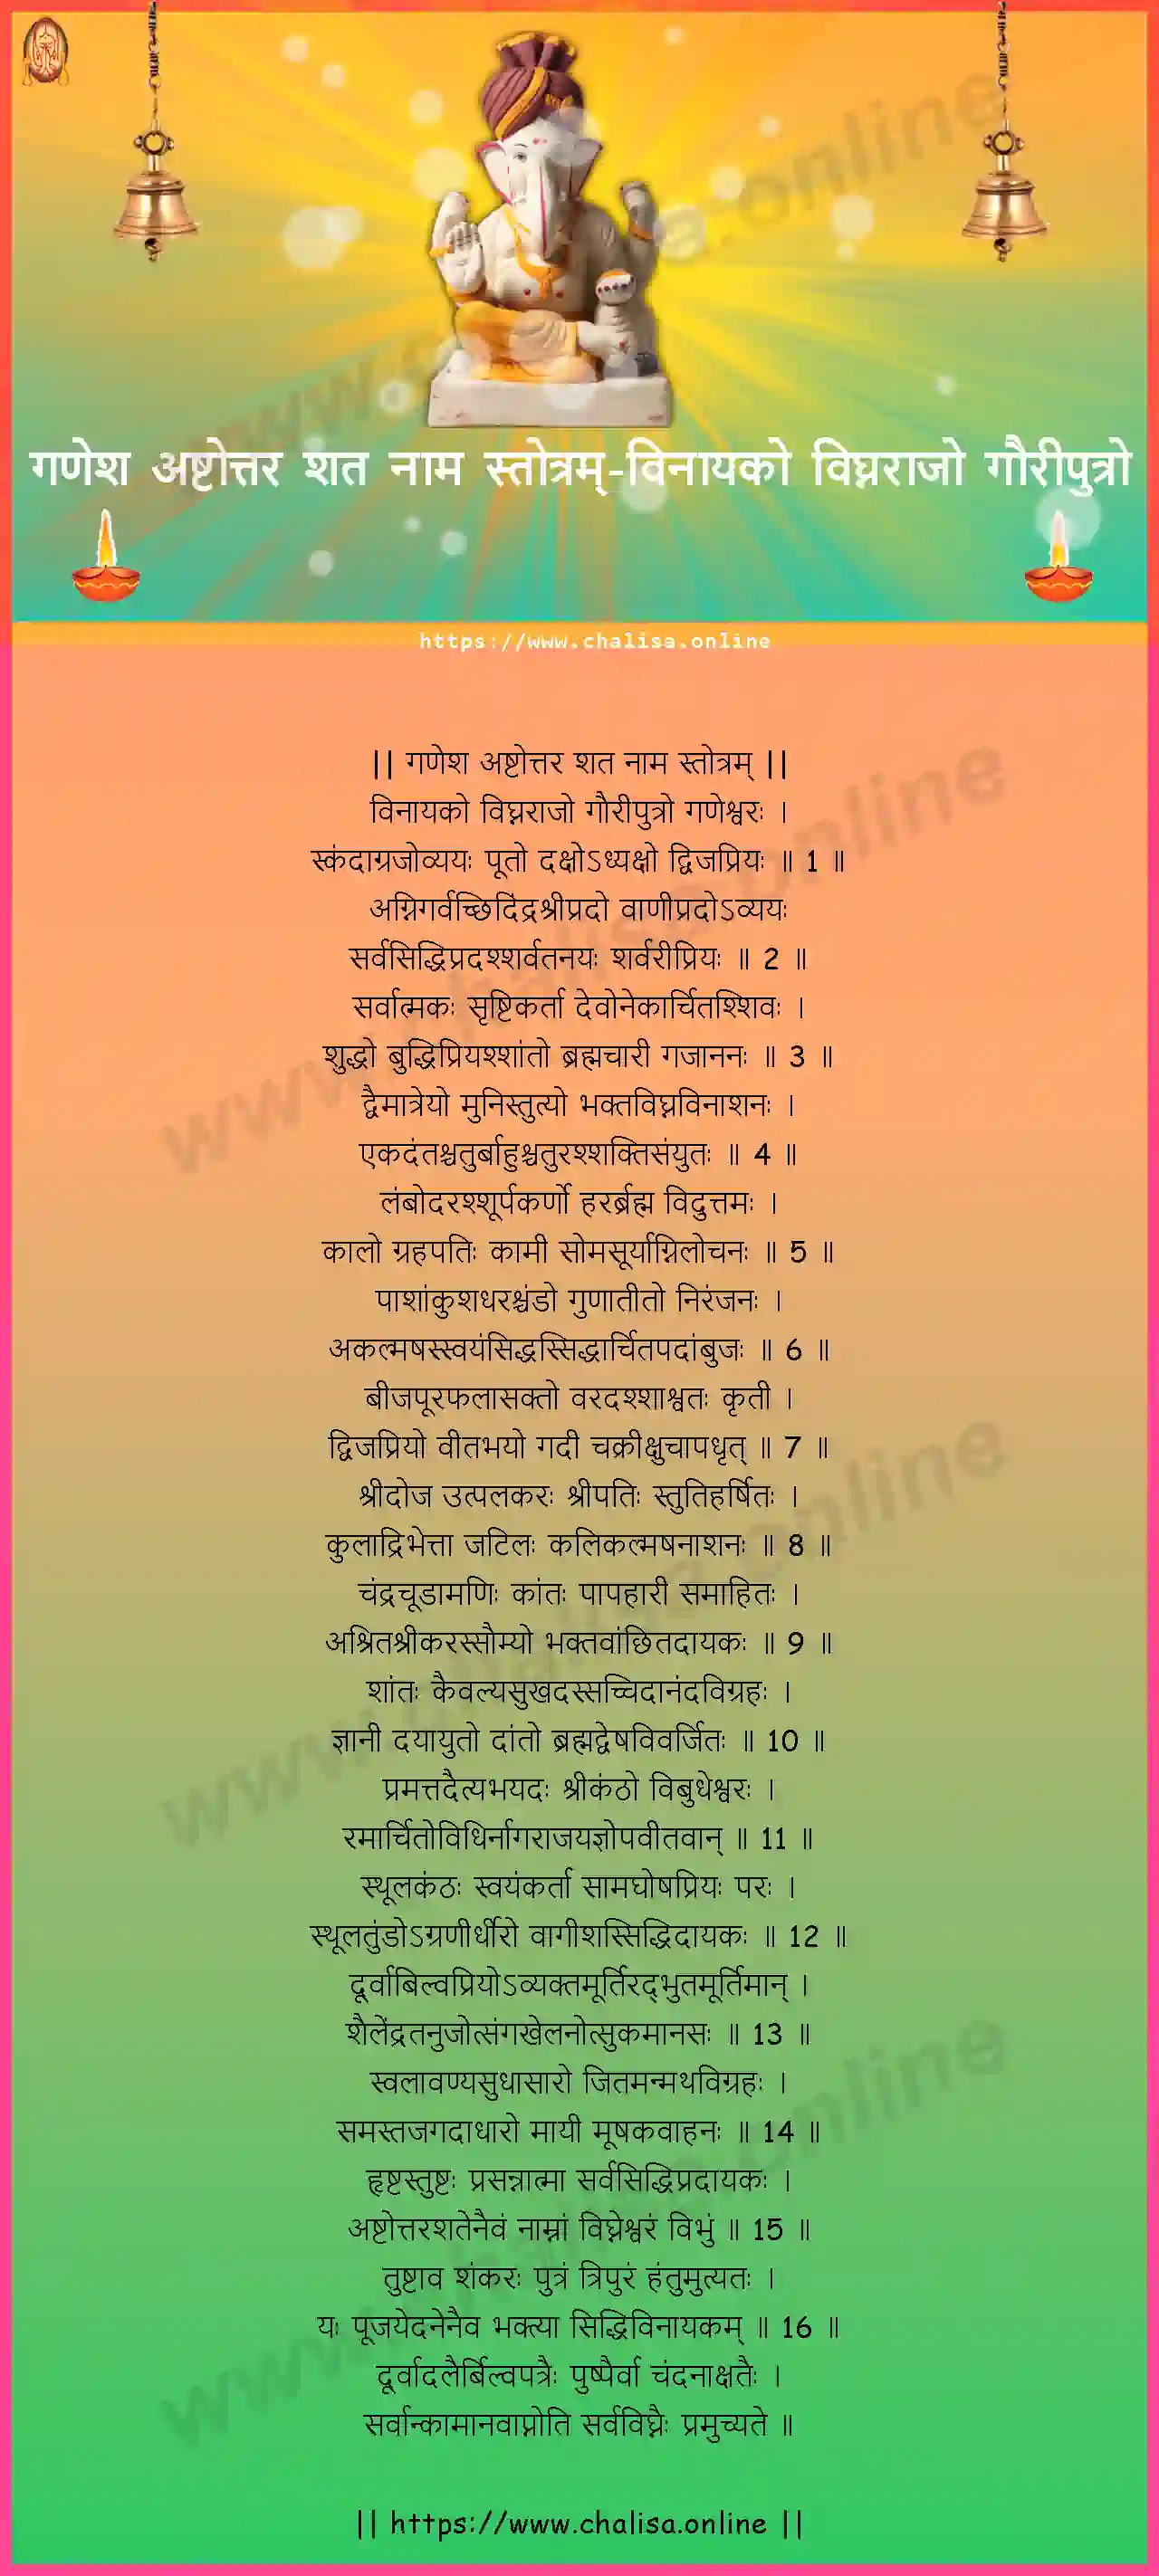 vinayako-vighnarajo-ganesha-ashtottara-sata-nama-stotram-konkani-konkani-lyrics-download